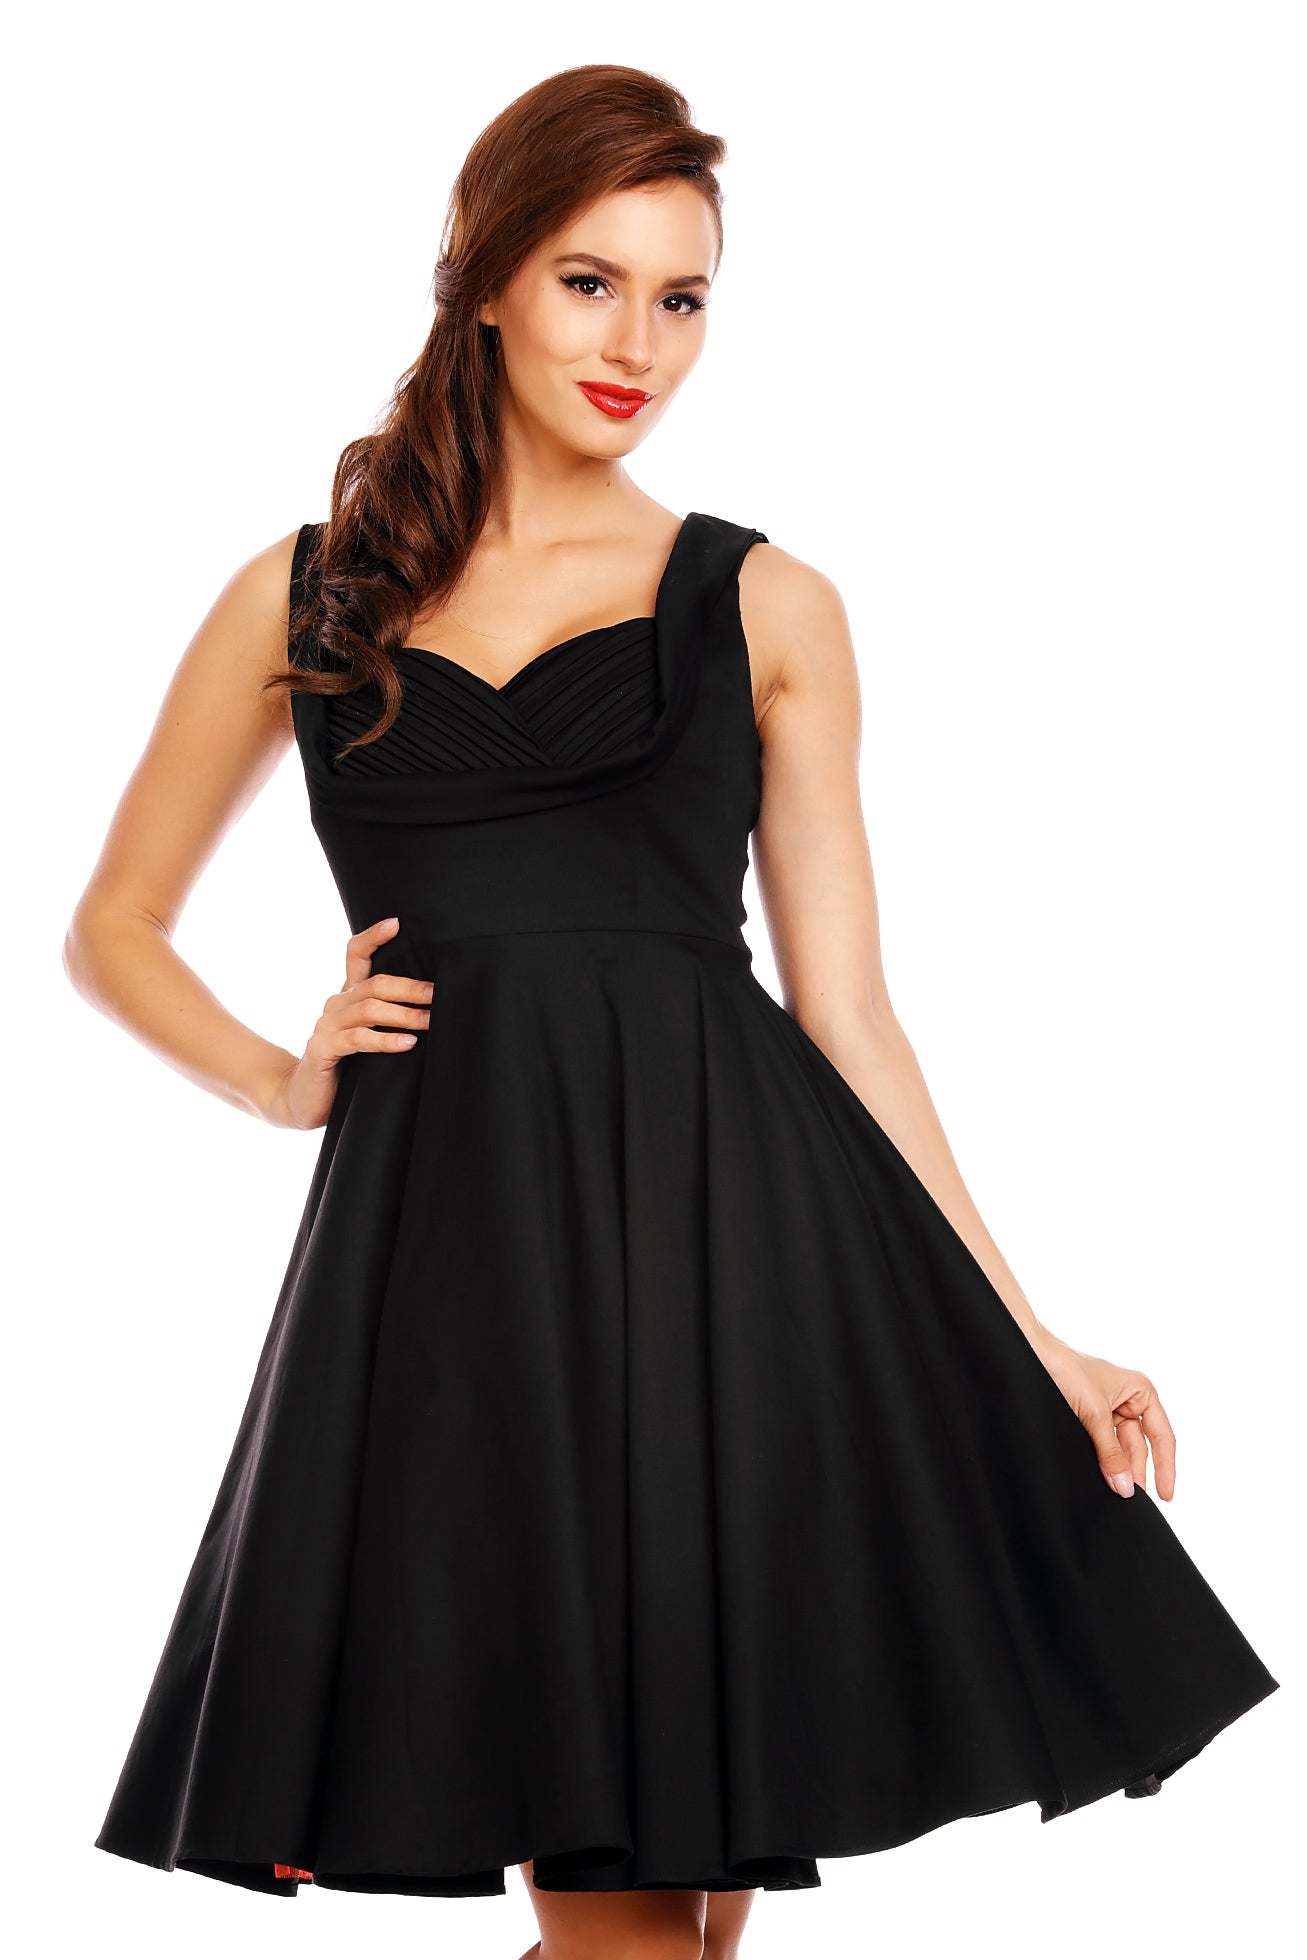 Vintage Style Jive Dress in All Black